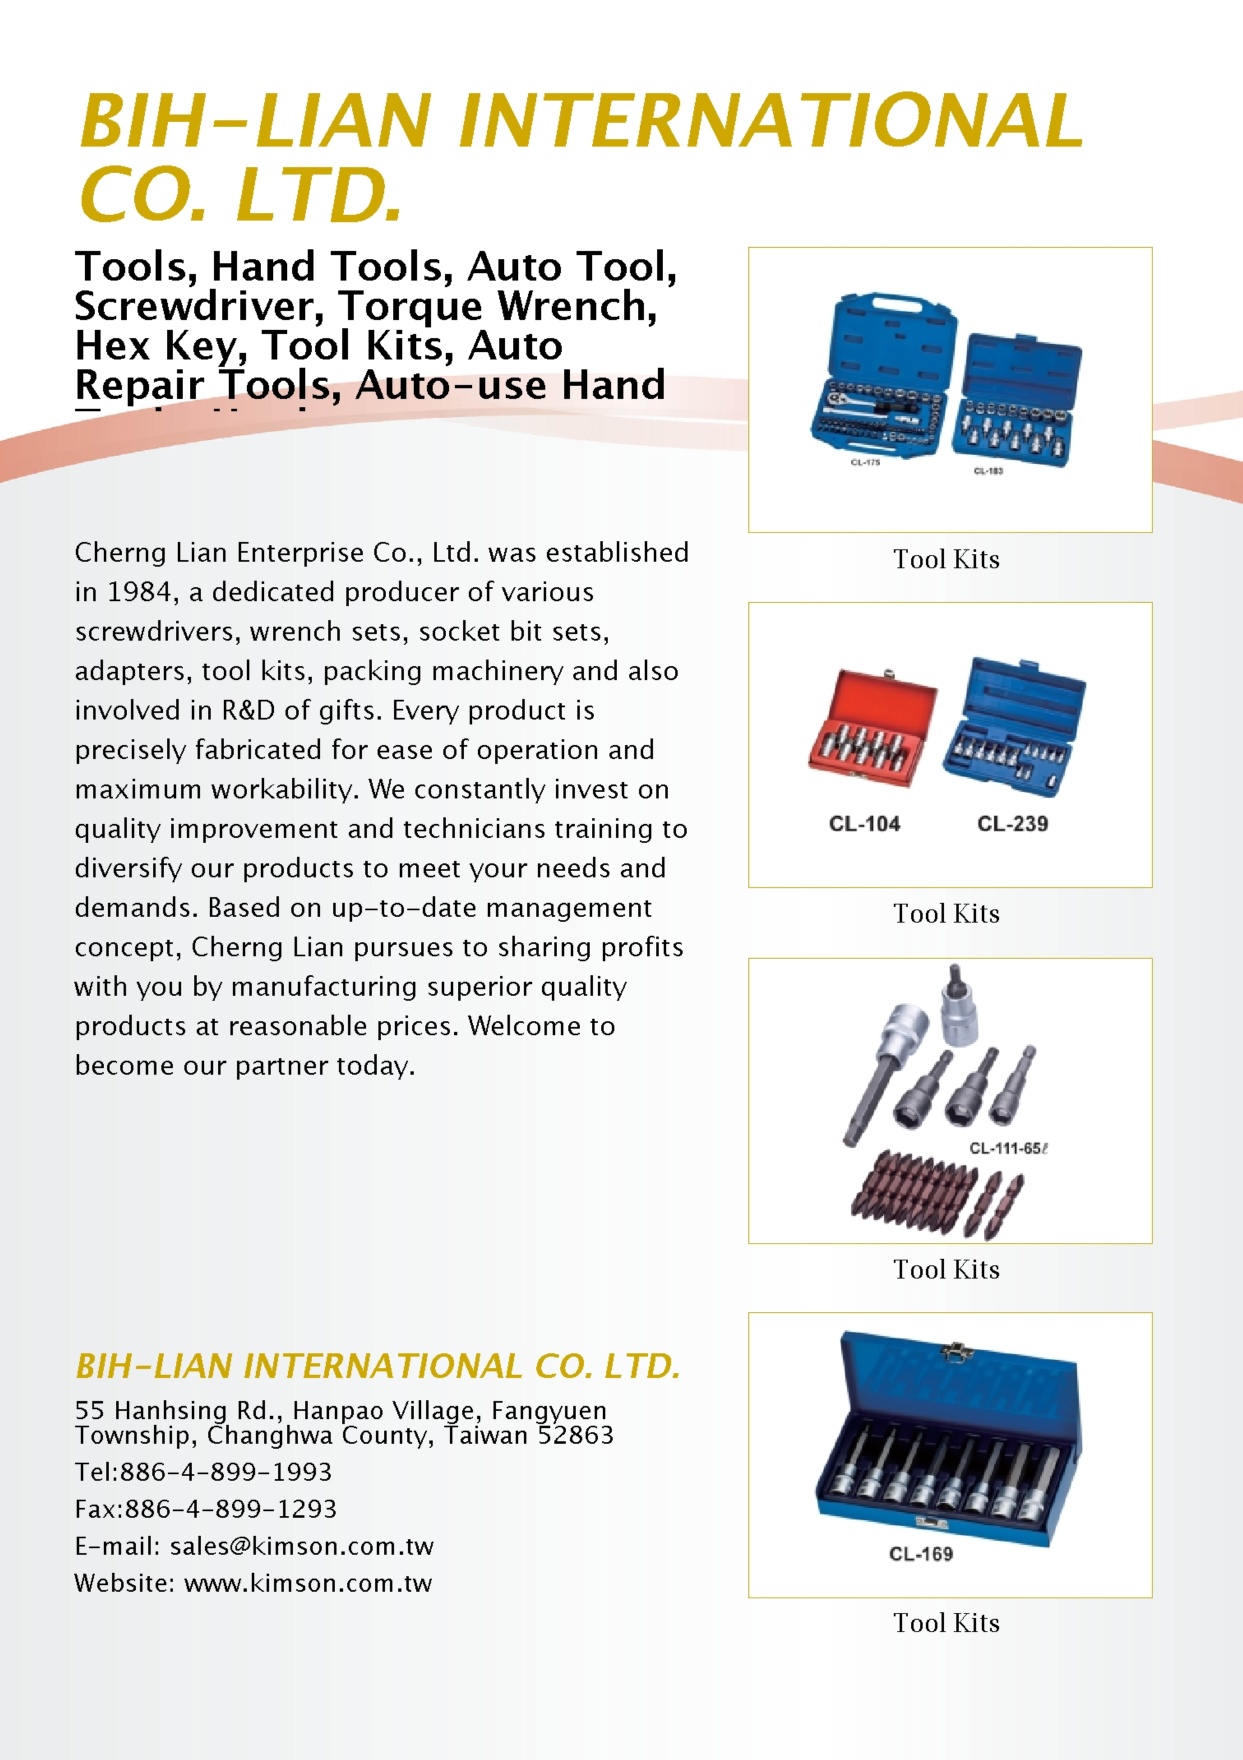 BIH-LIAN INTERNATIONAL CO., LTD.